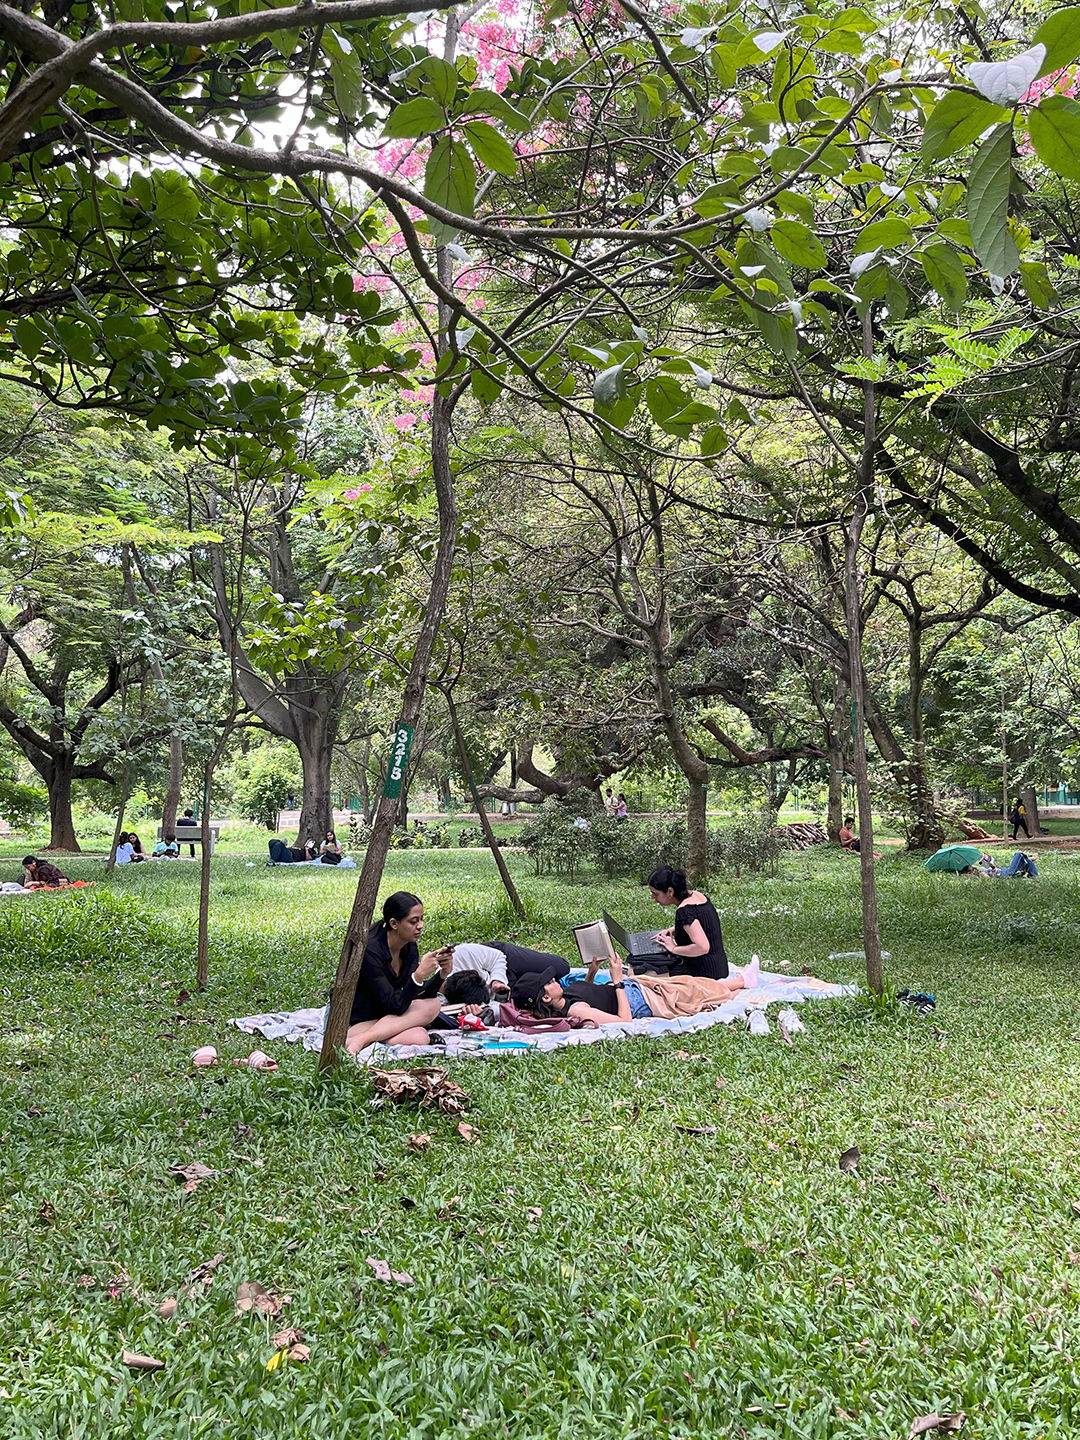 Bengaluru readers struggle to access municipal parks